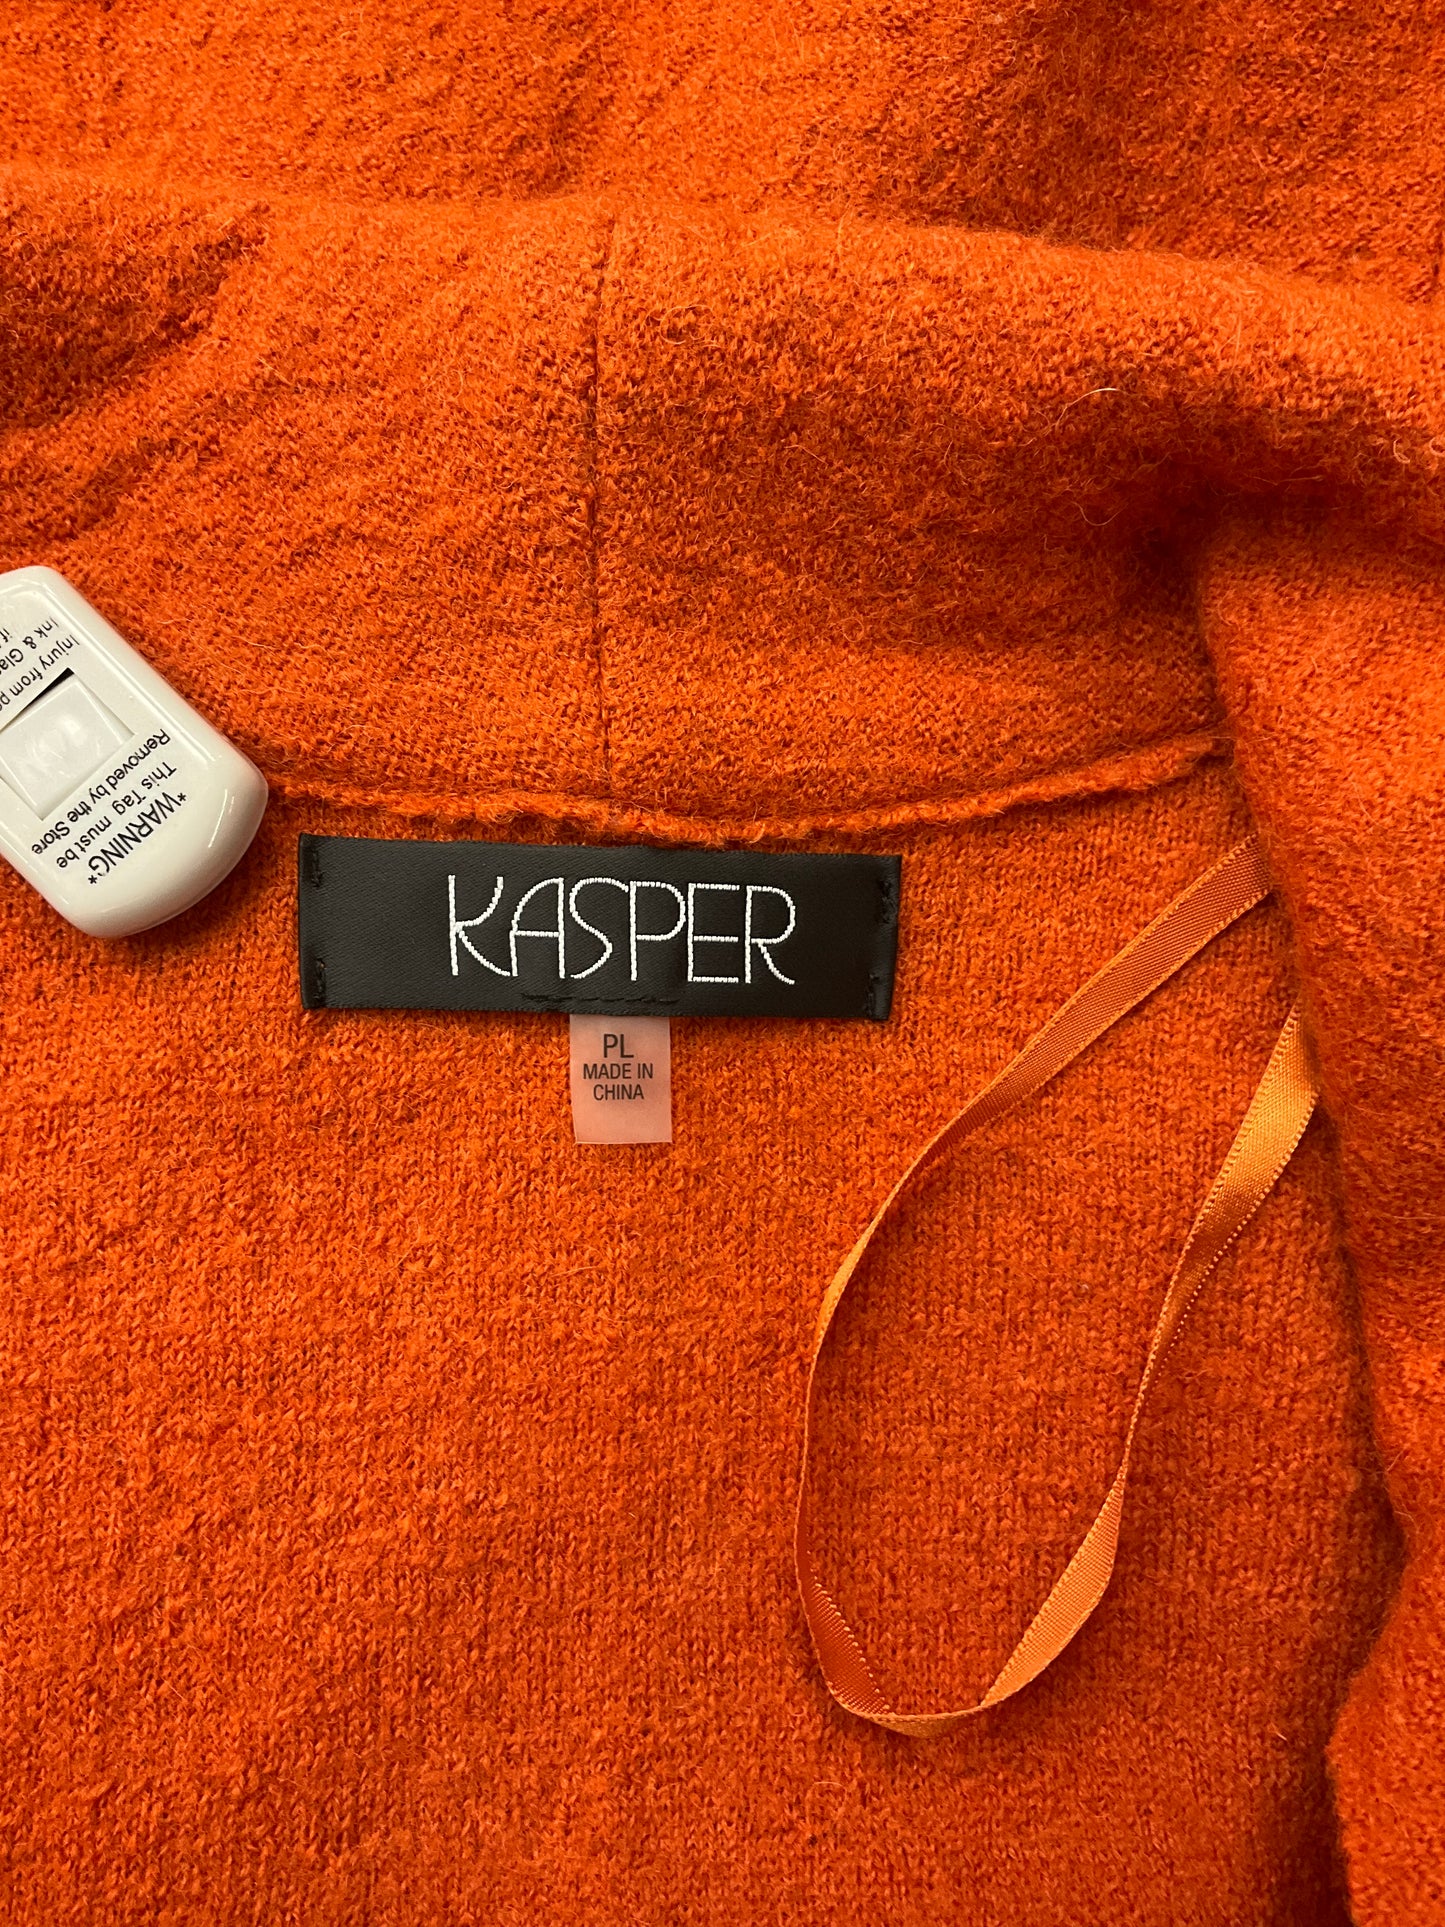 Jacket Other By Kasper  Size: Petite Large